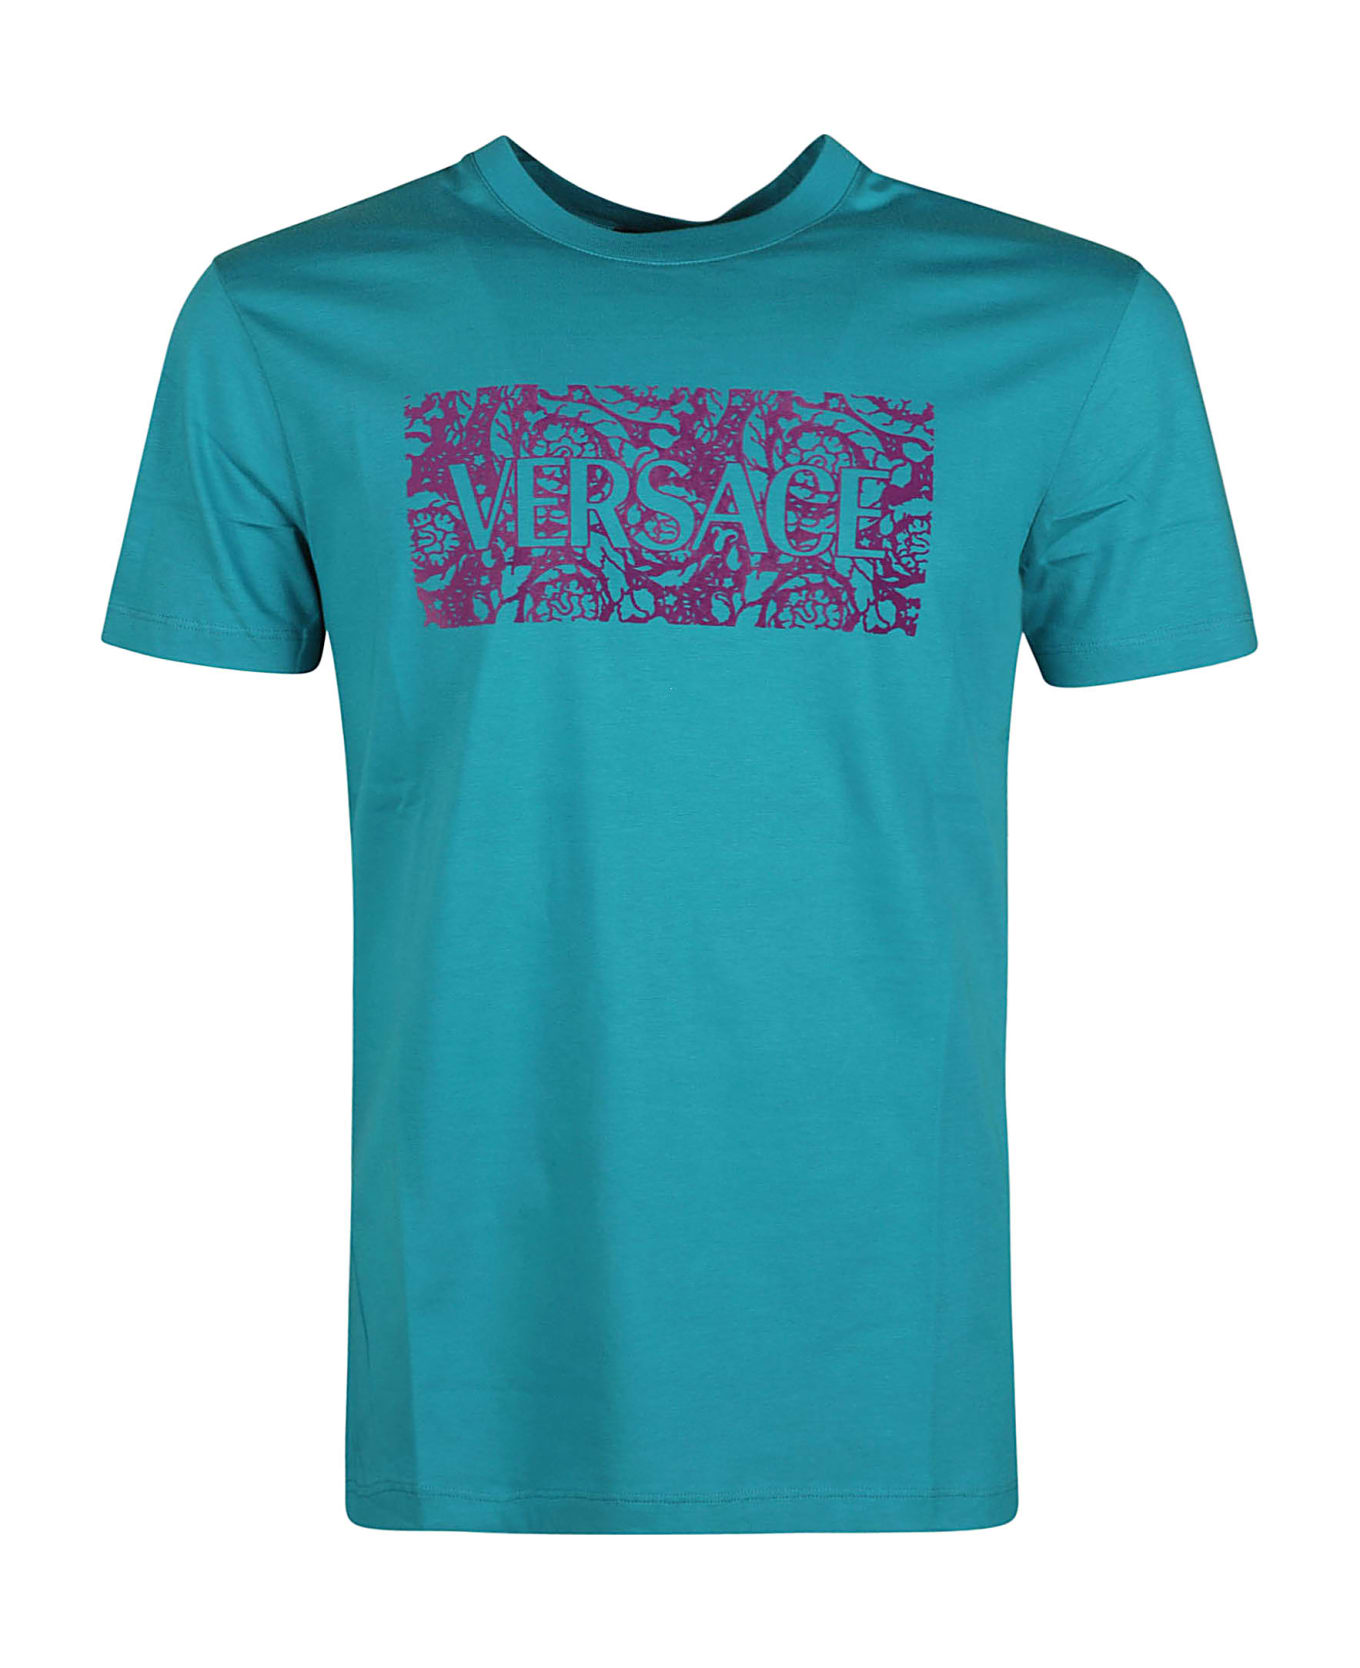 Versace Baroque Flock Print T-shirt - Turquoise